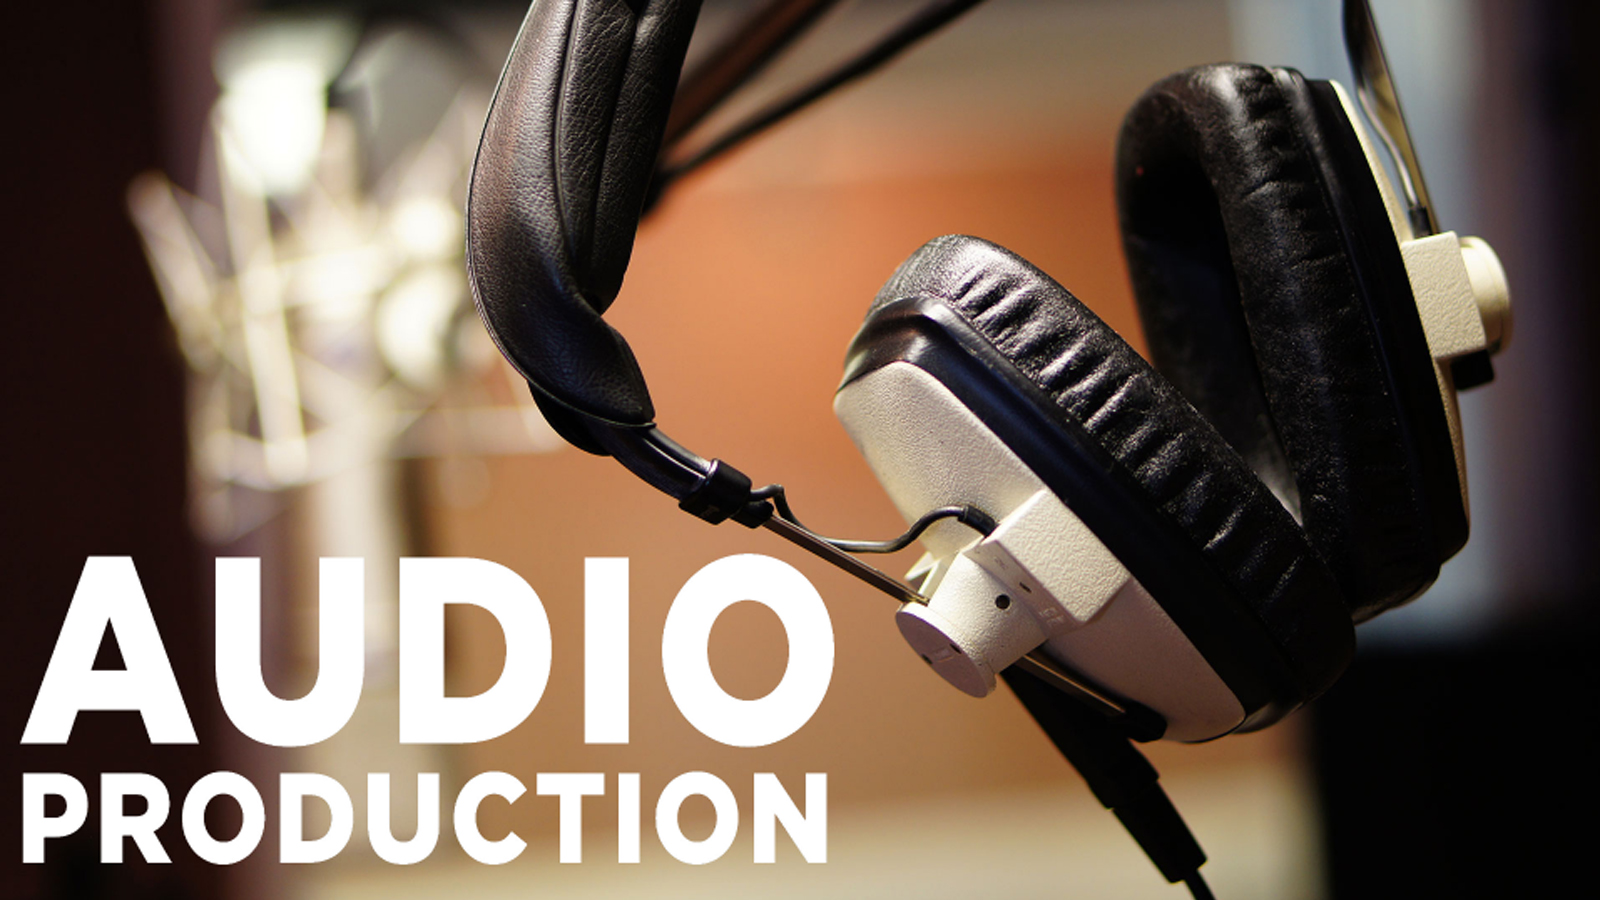 Audio production